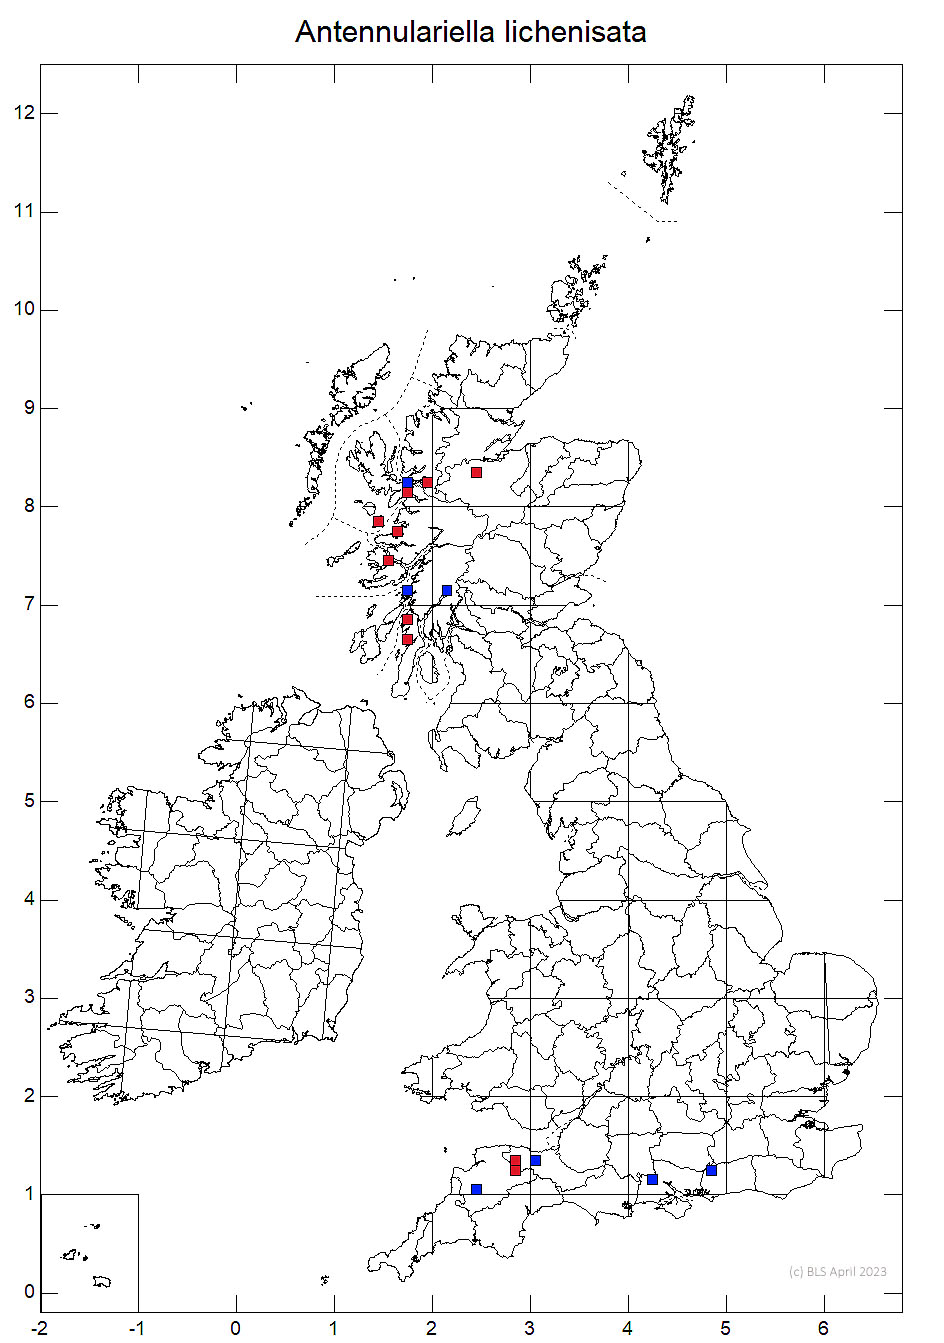 Antennulariella lichenisata 10km sq distribution map